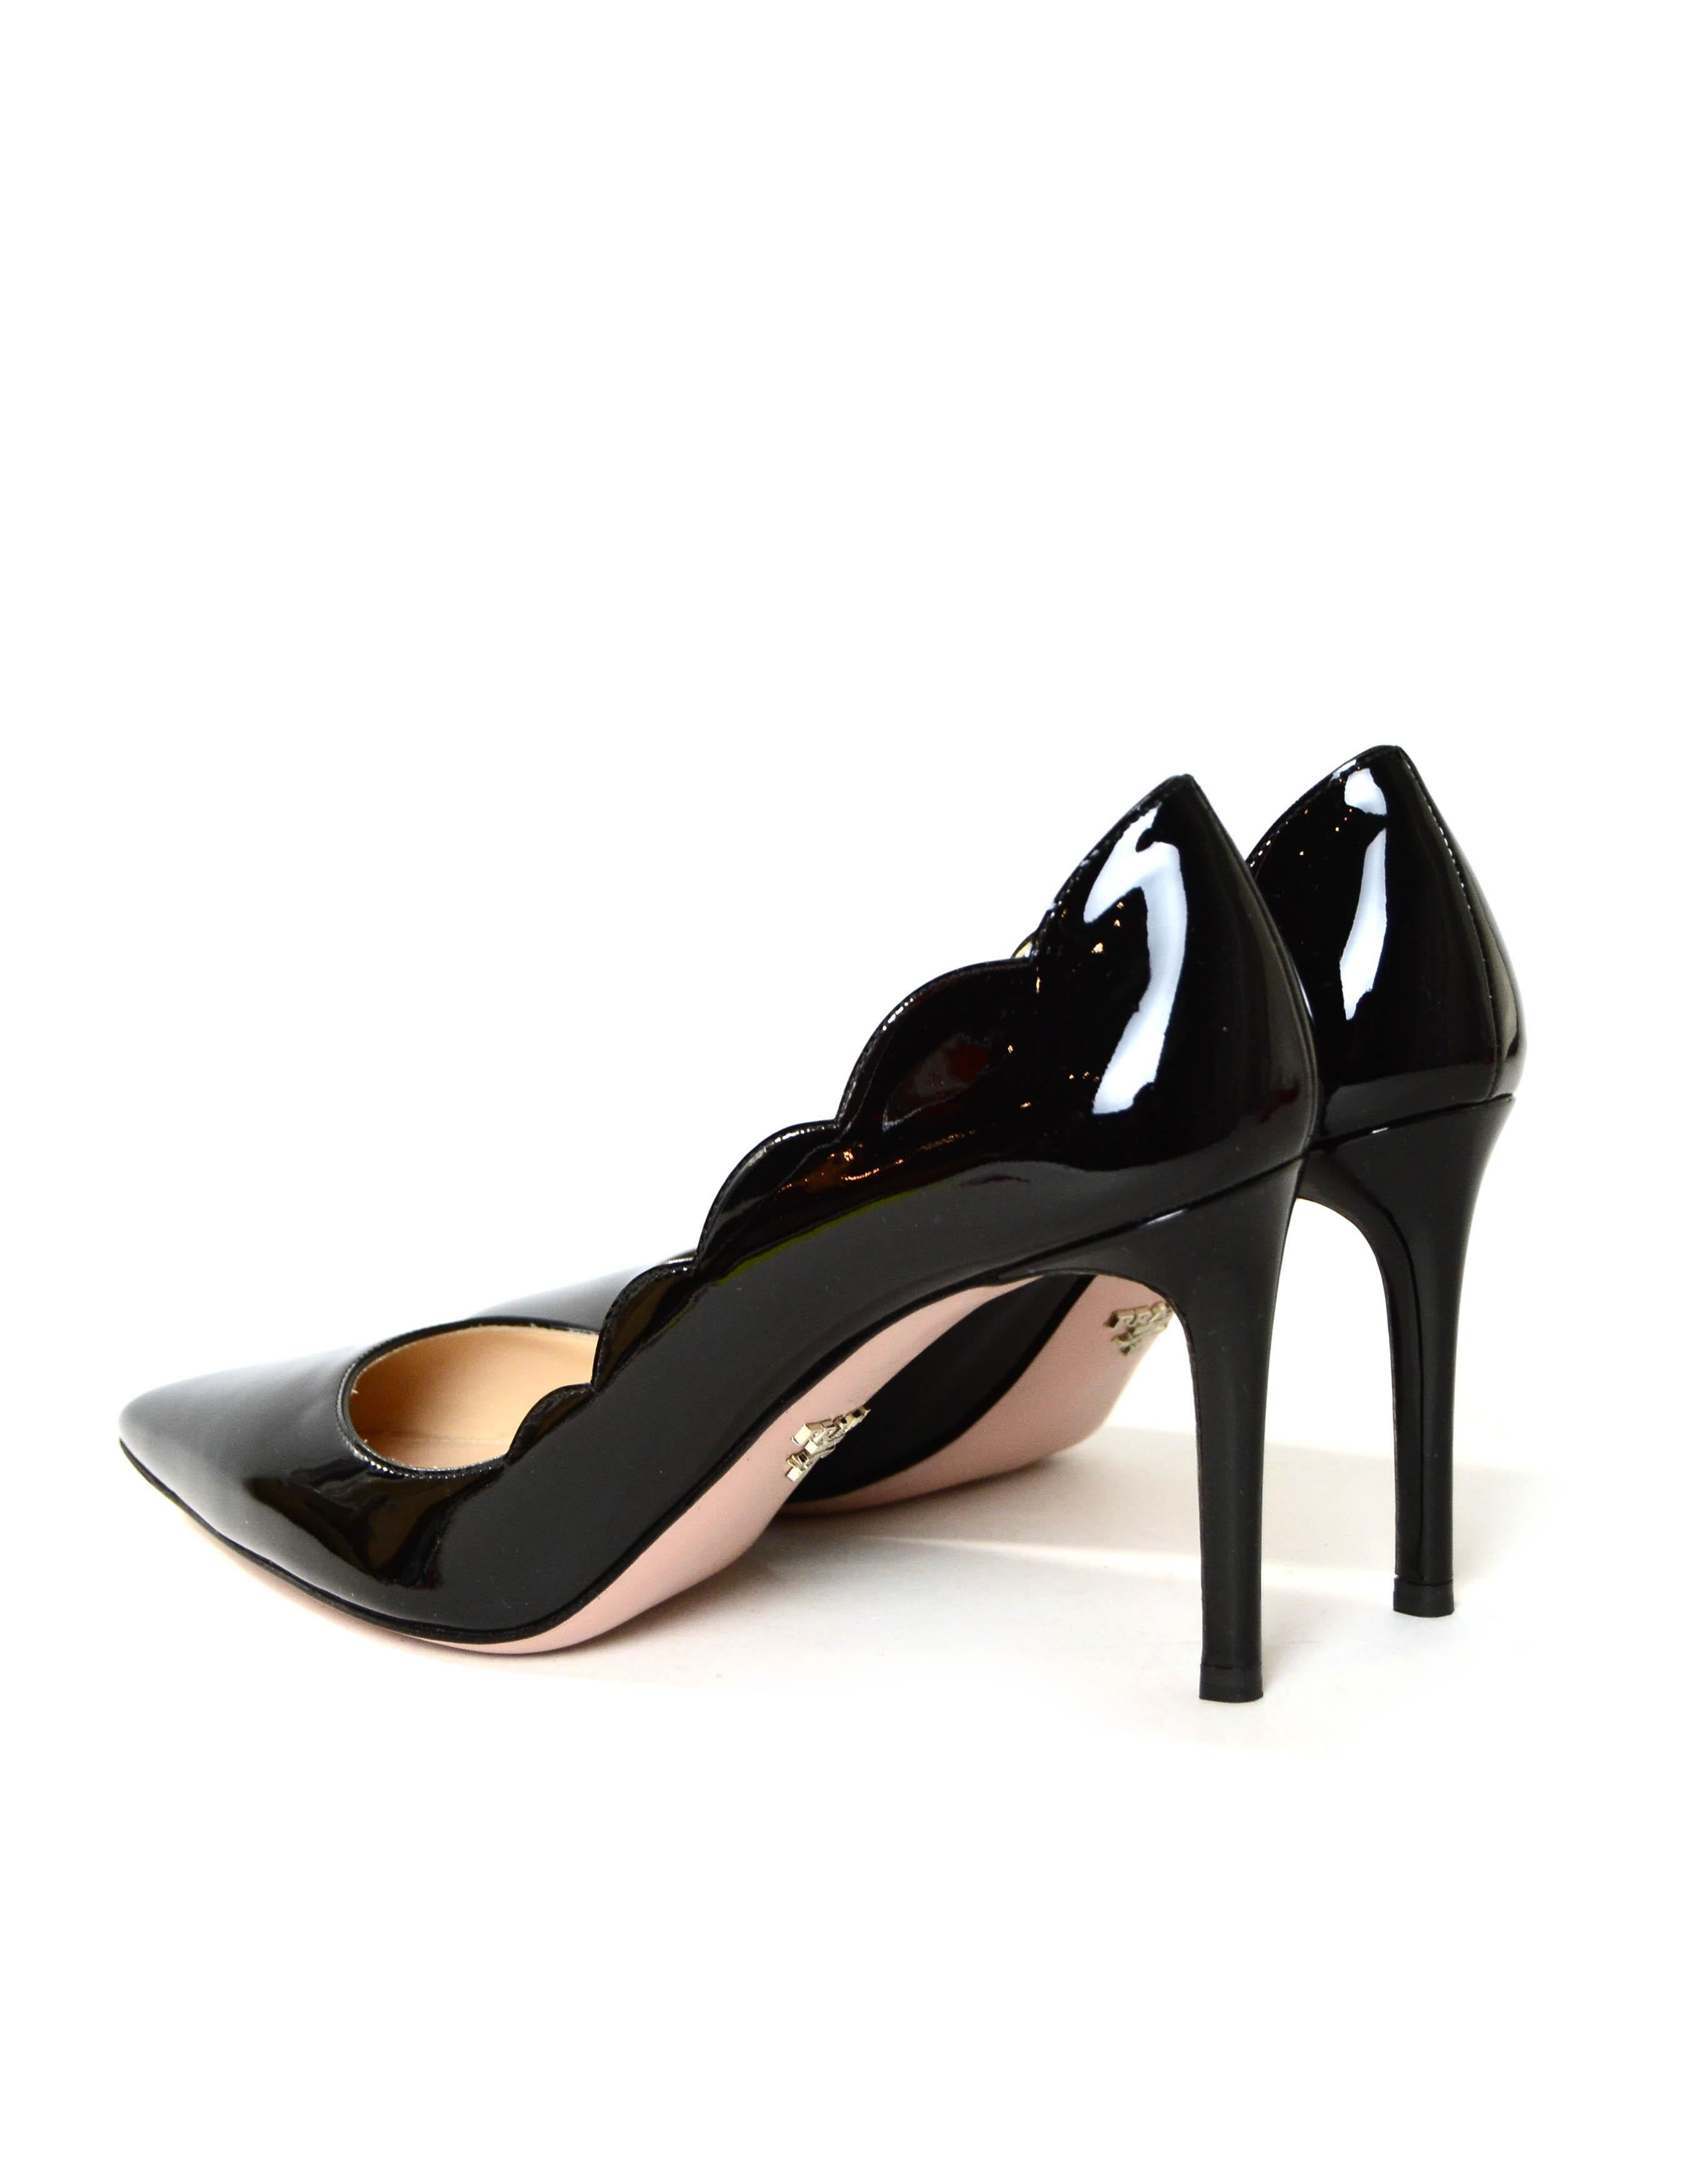 Women's Prada Black Patent Pointed Heels w/ Scallop Edges sz 39.5